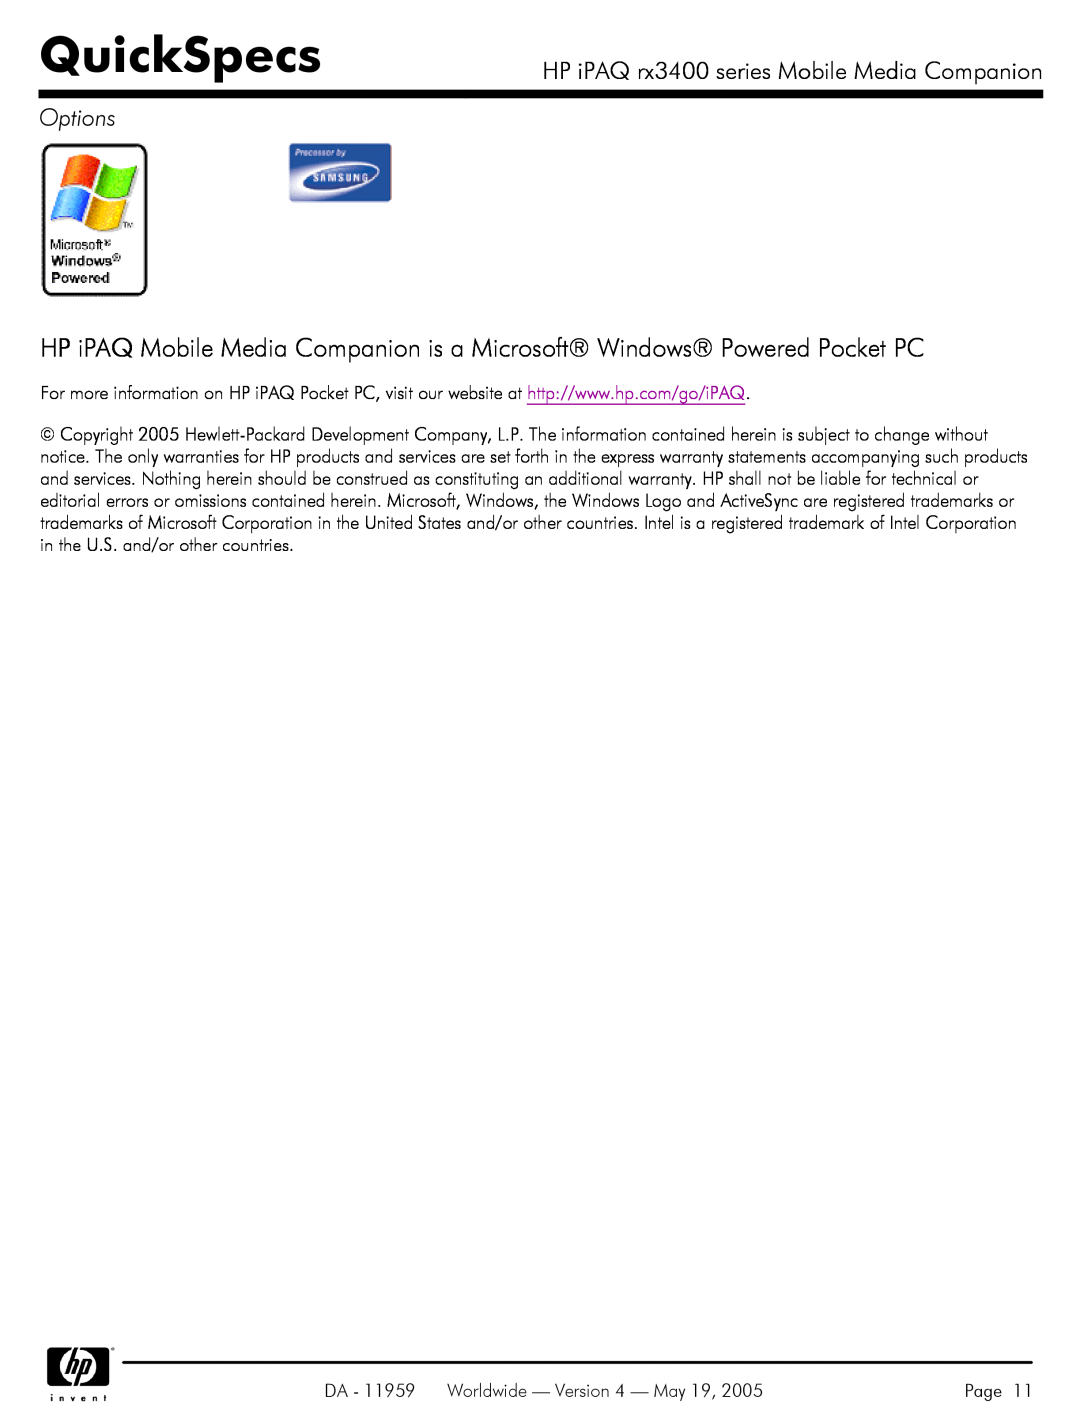 HP manual QuickSpecs, HP iPAQ rx3400 series Mobile Media Companion, Options 